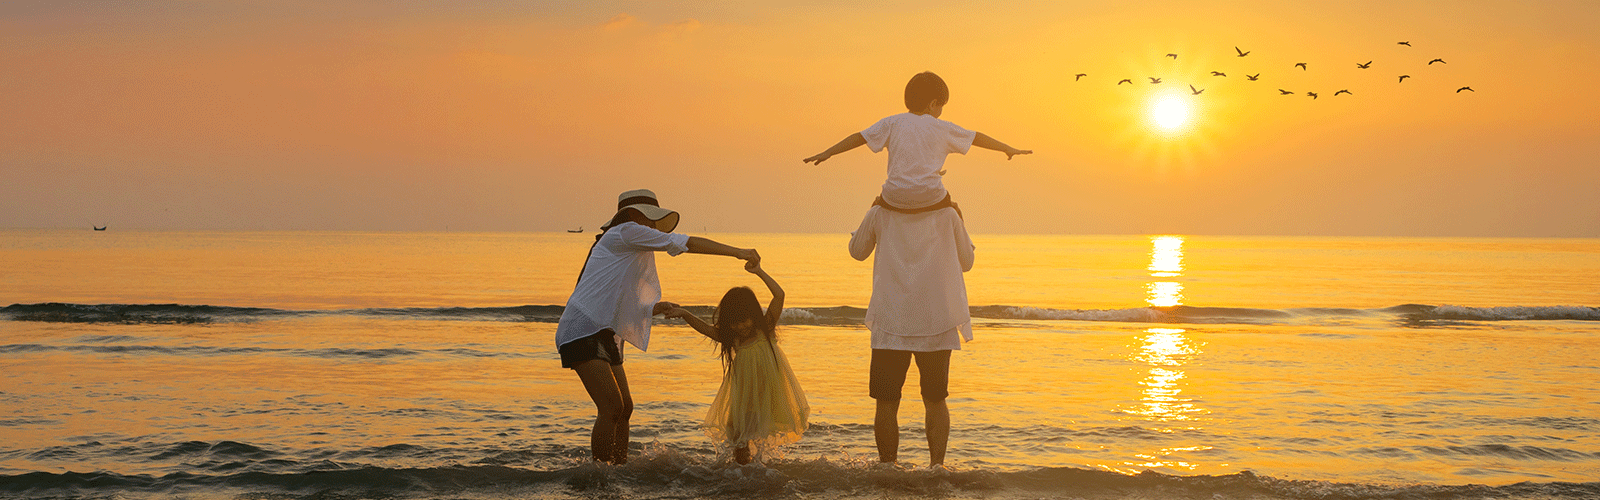 Family enjoying the beach at sunset. 